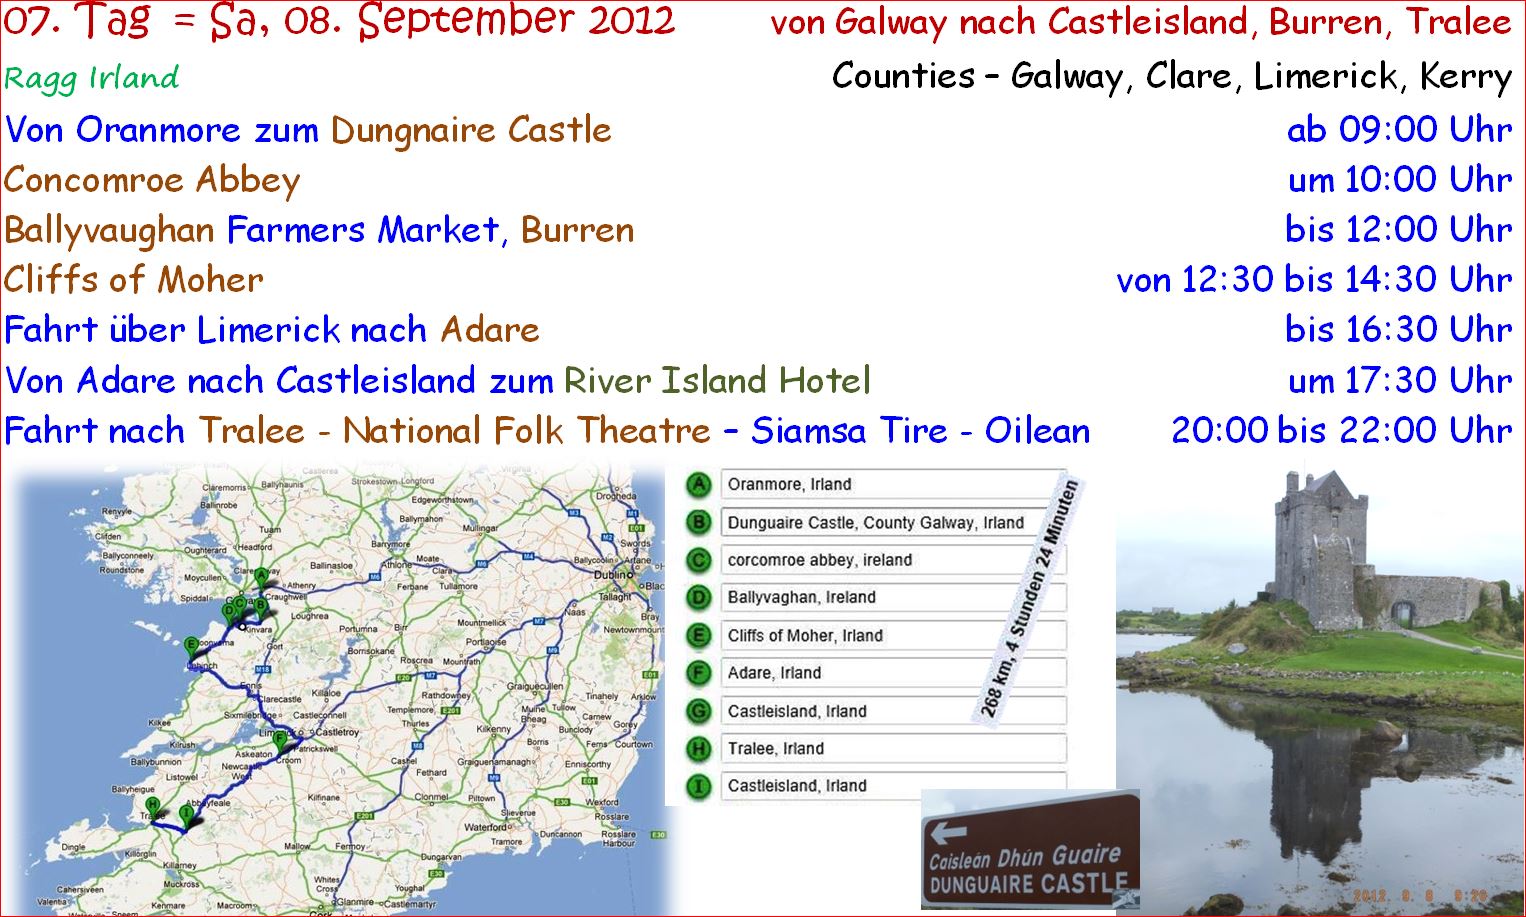 ragg 2012-09-08 - 1110Aweb - Irland - Galway nach Castleisland - Tag 07 - S09 B01